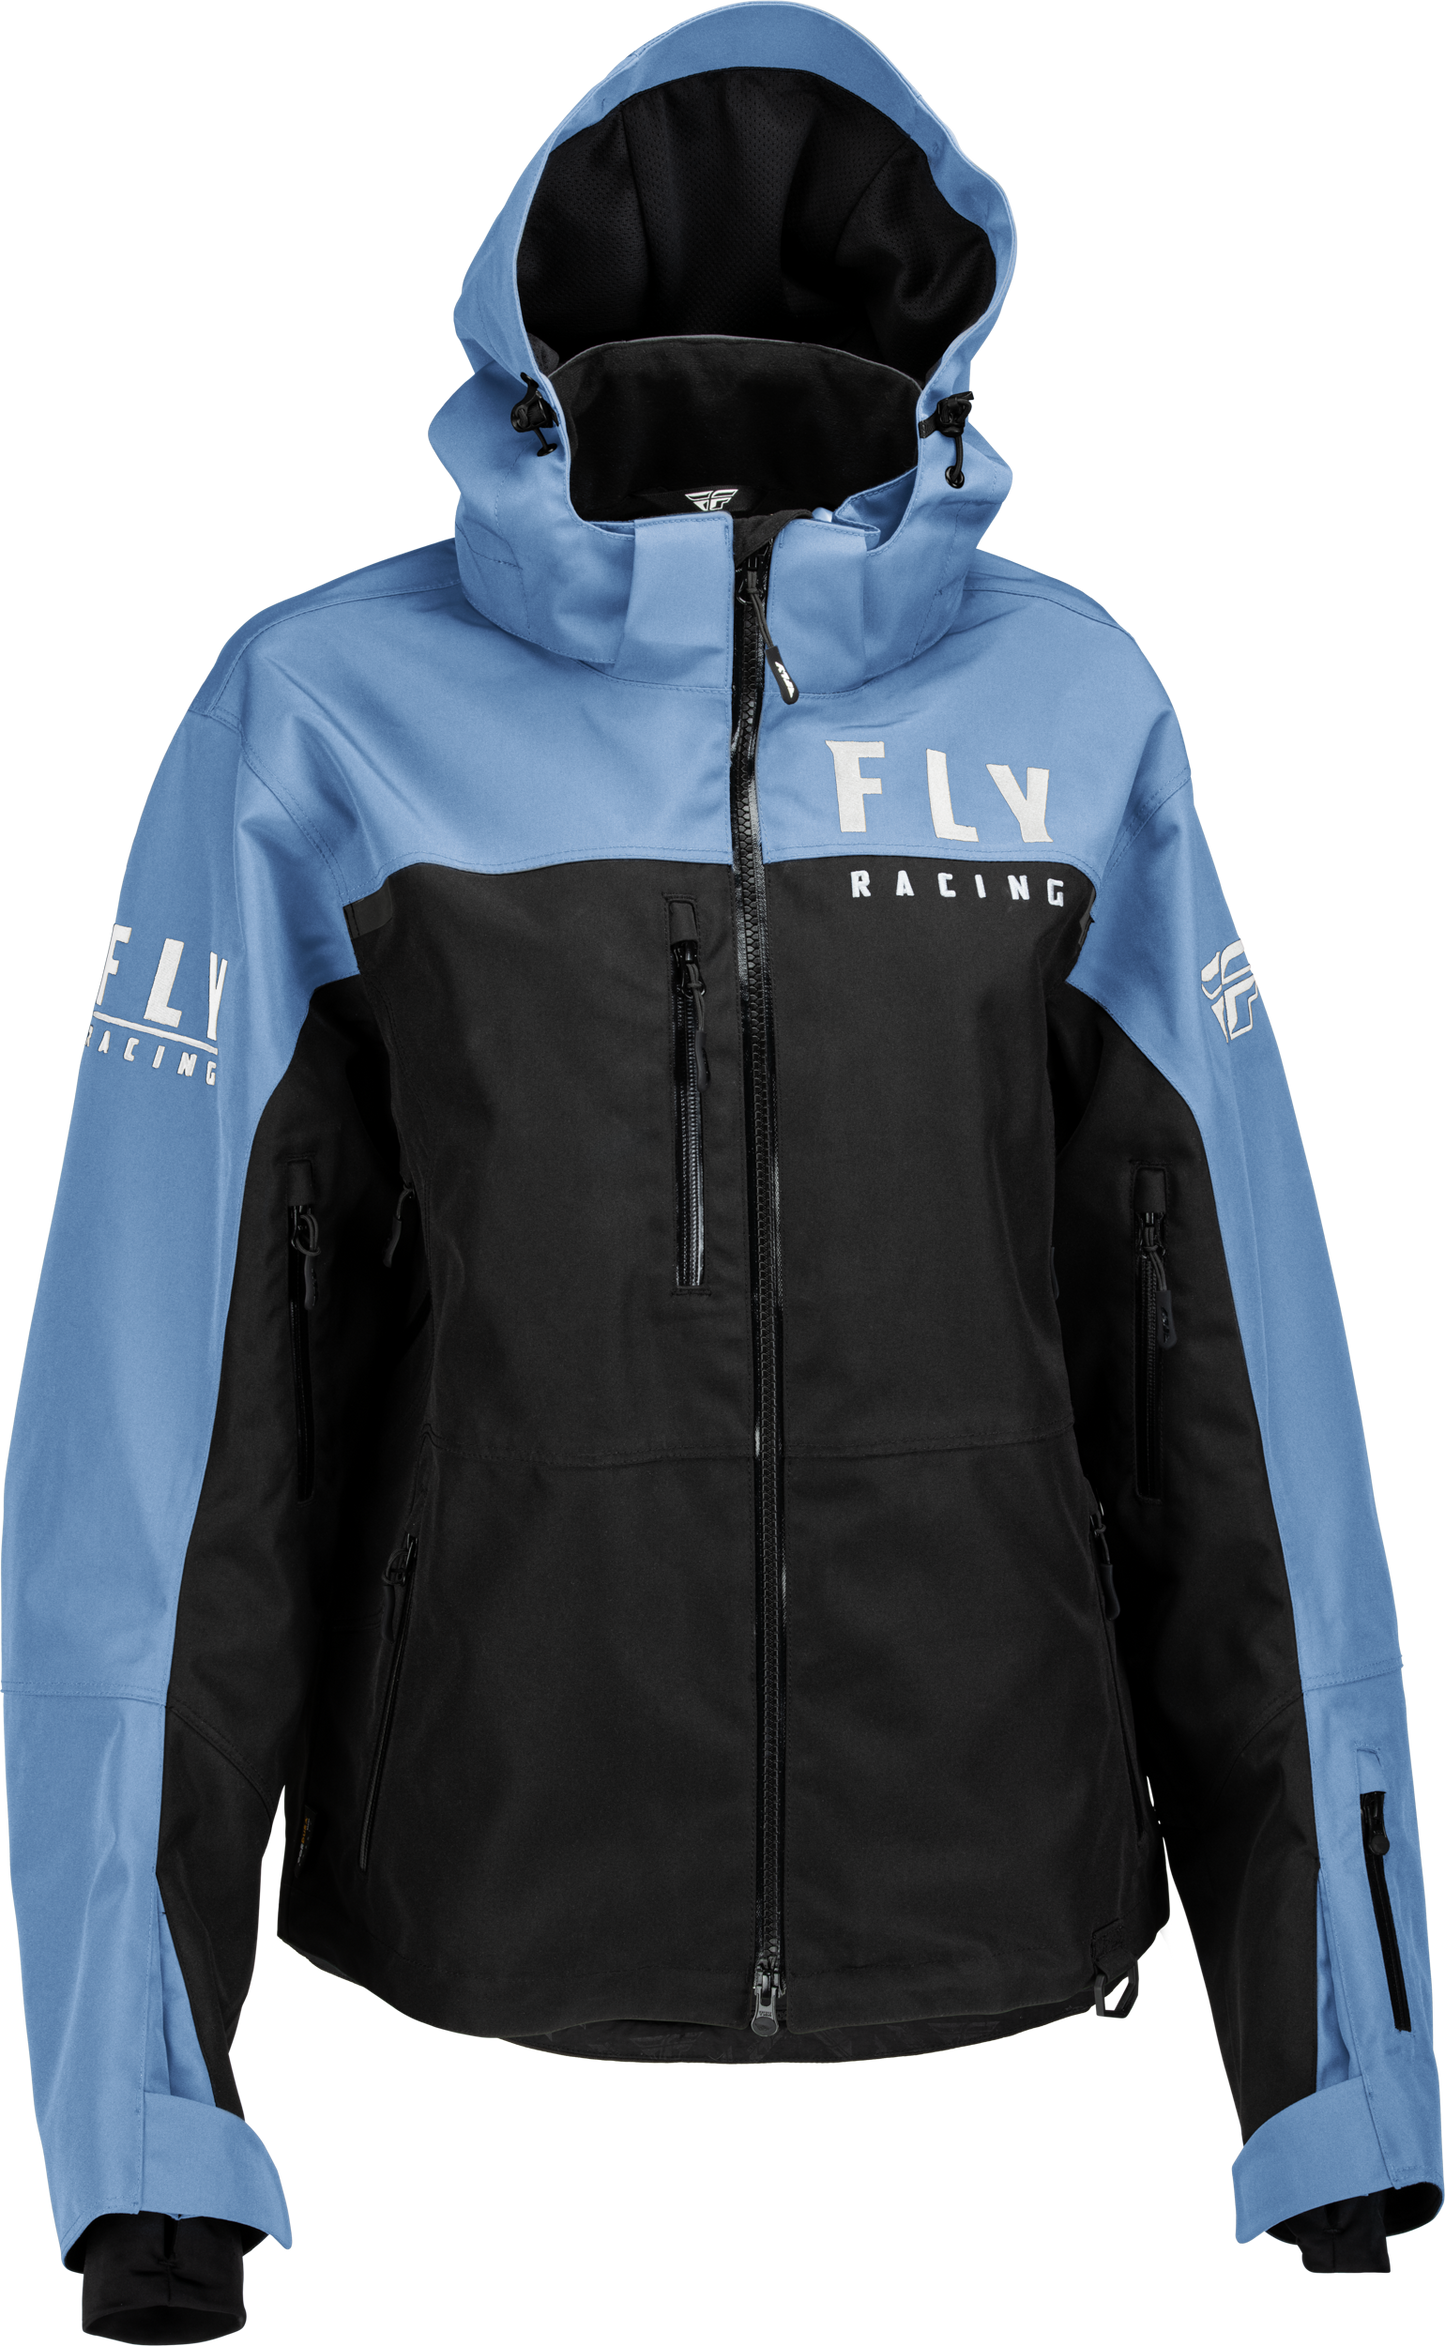 FLY RACING Women's Carbon Jacket Black/Blue 4x 470-45014X